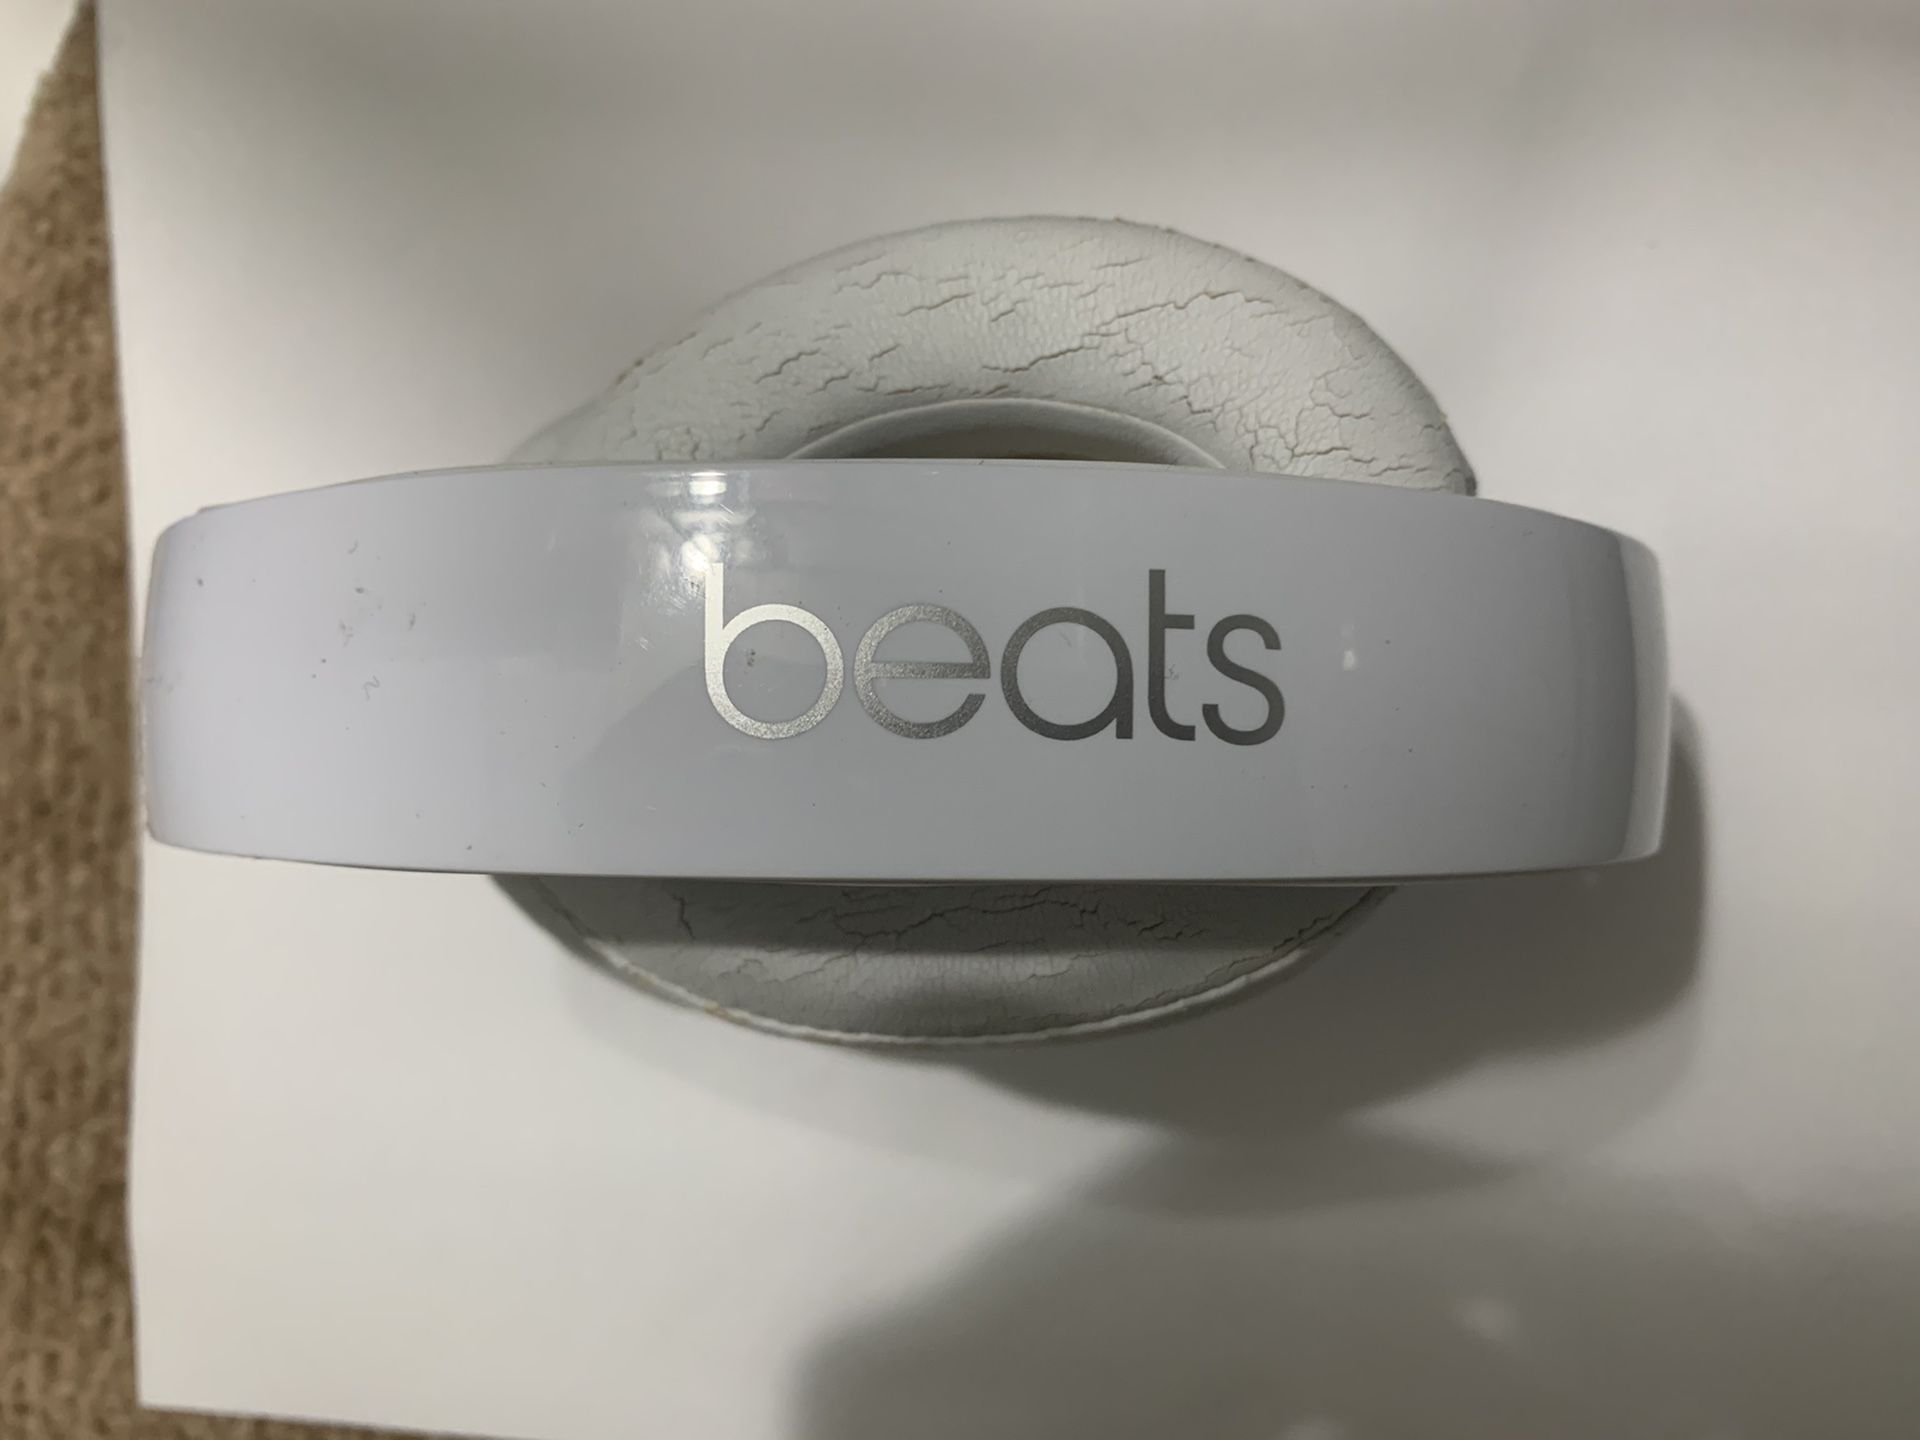 Beats Studio Wireless